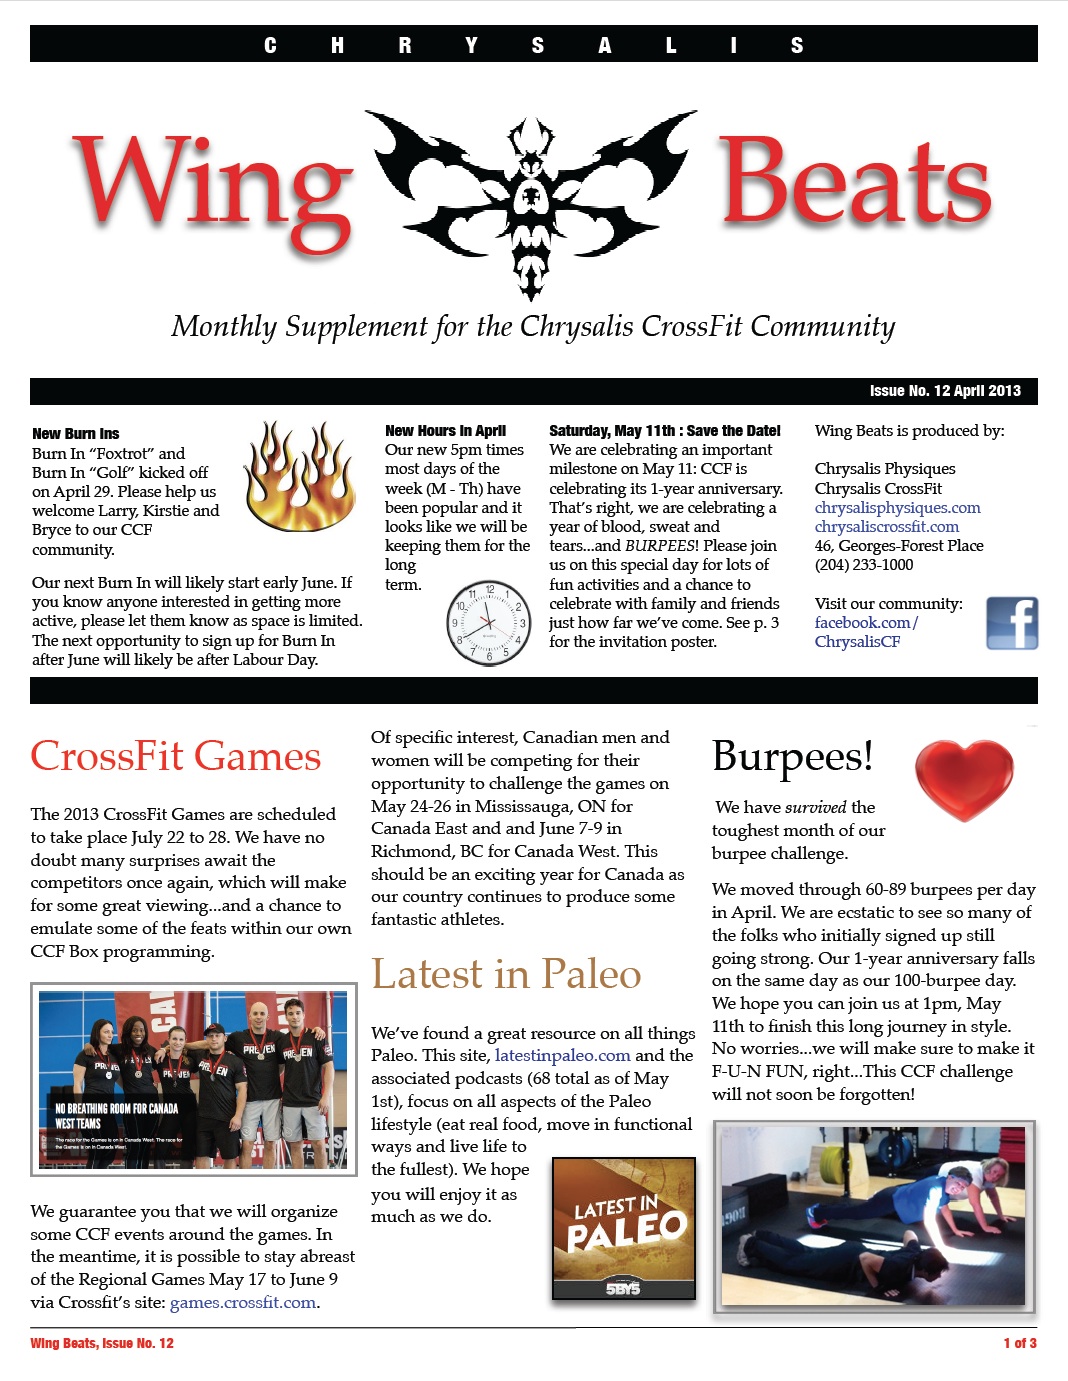 WingBeats Issue #12 - April 2013